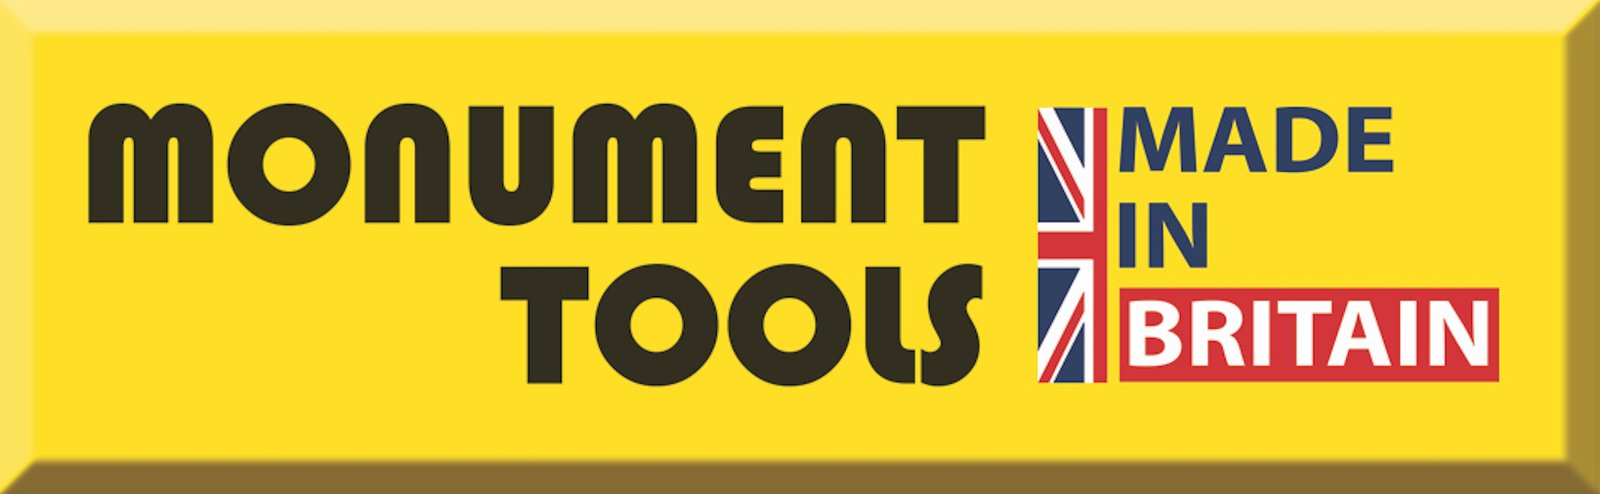 Monument Tools logo